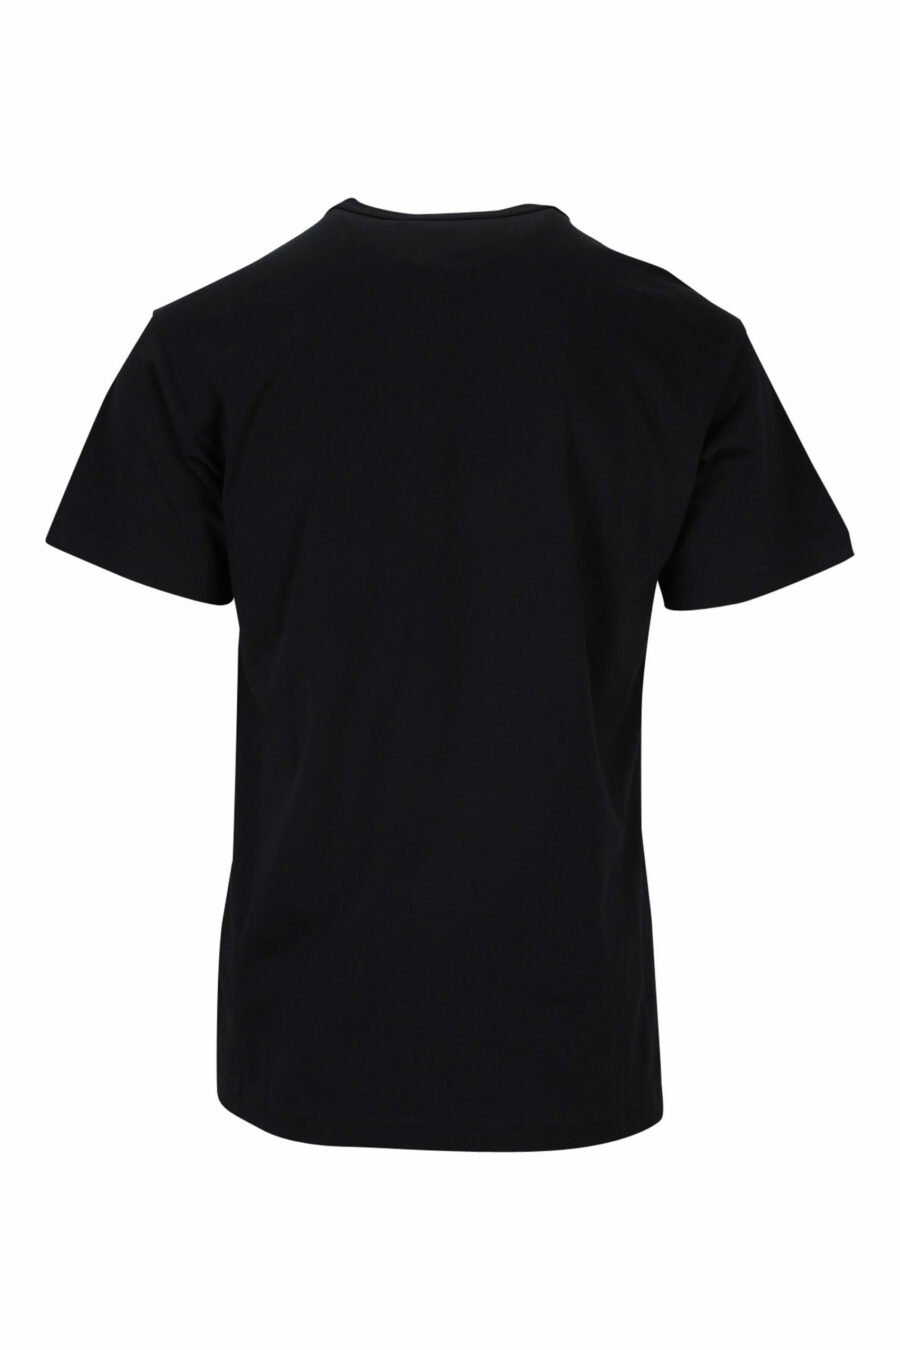 Schwarzes T-Shirt mit kreisförmigem Barock-Maxilogo - 8052019477481 1 skaliert